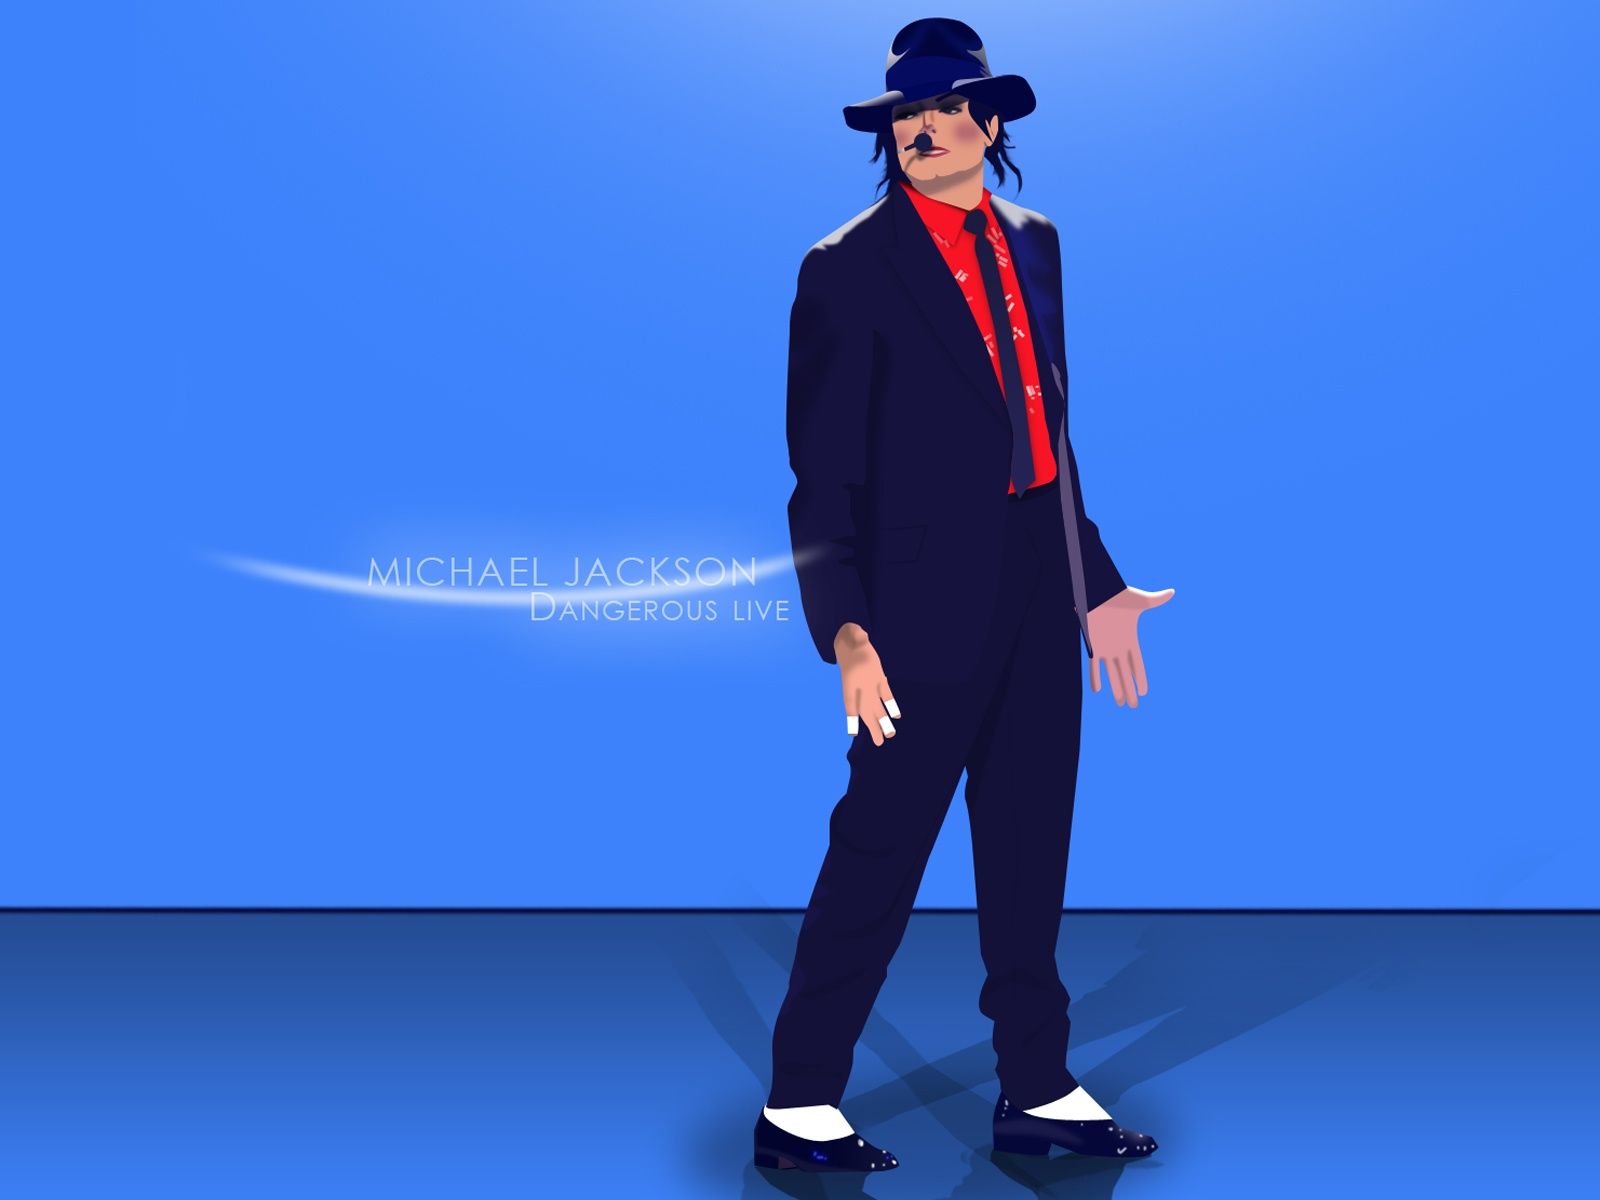 Michael Jackson Dangerous Live Wallpaper in jpg format for free download